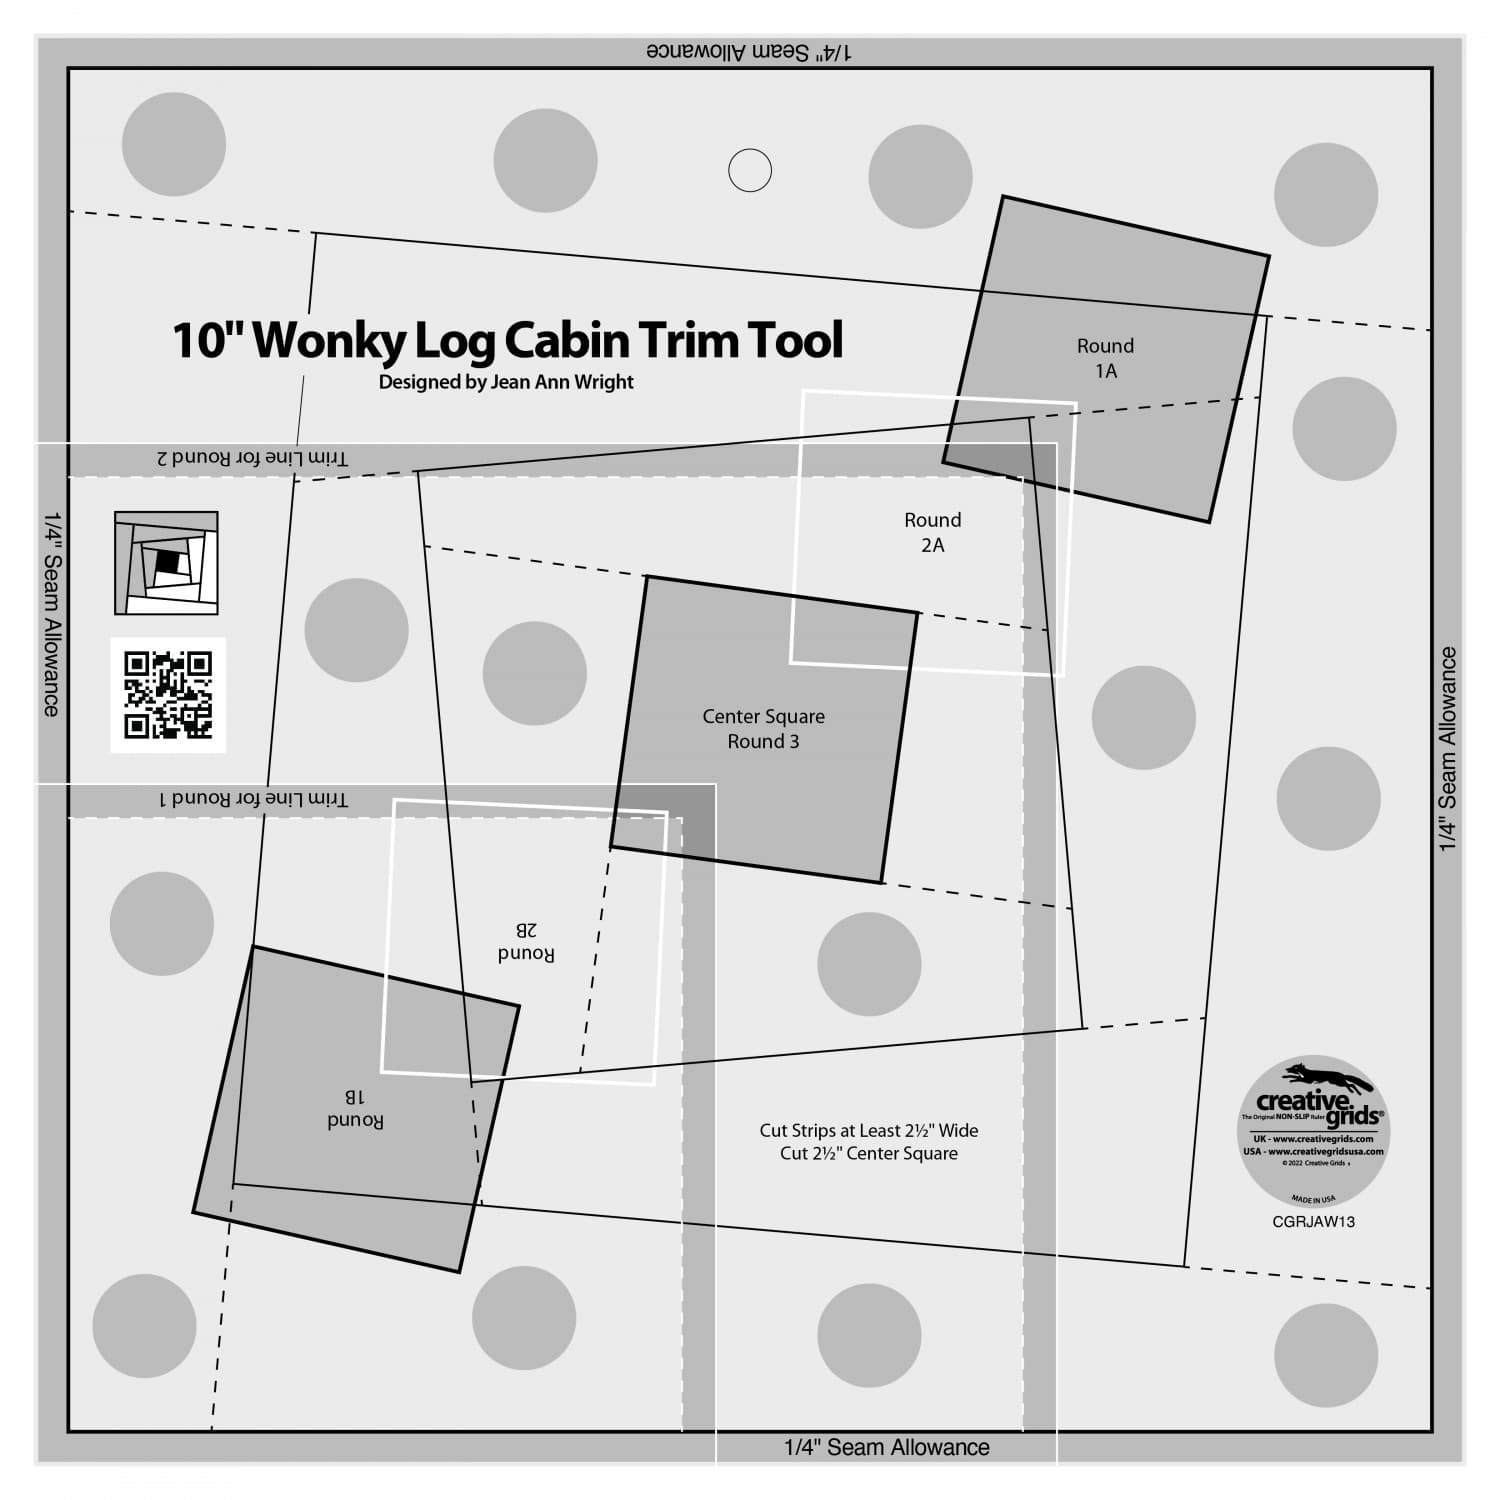 Creative Grids 10" Wonky Log Cabin Trim Tool image # 103153